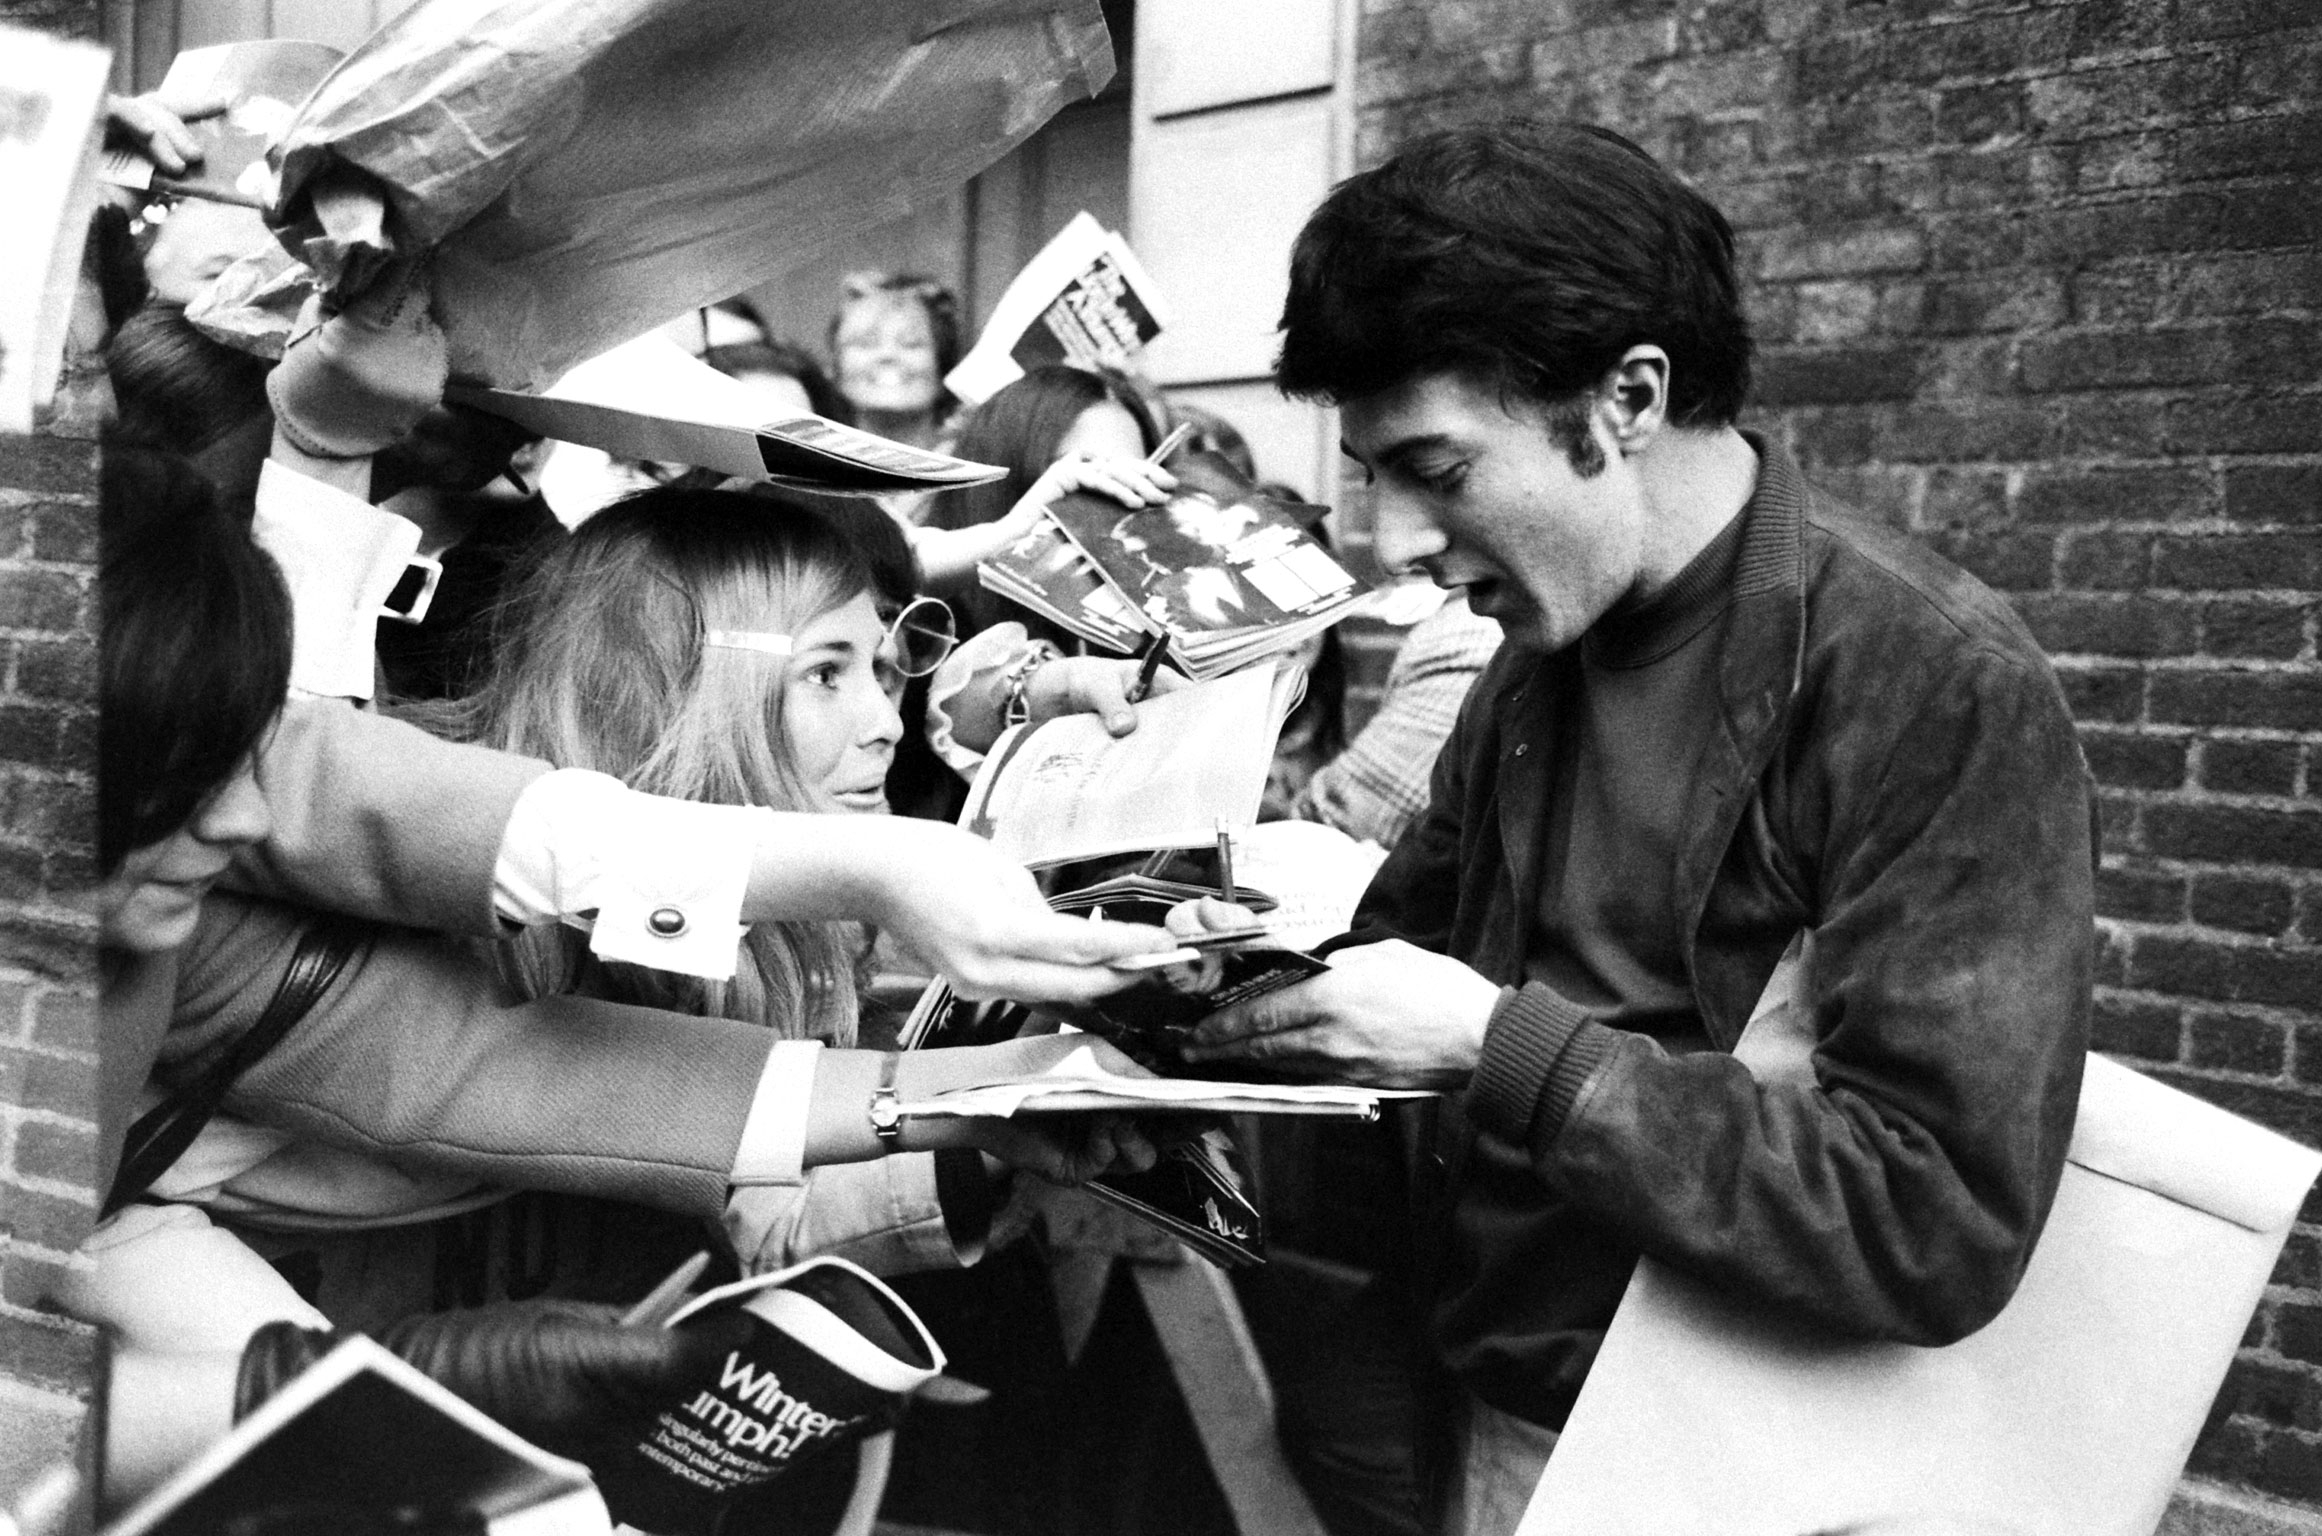 Dustin Hoffman signing autographs